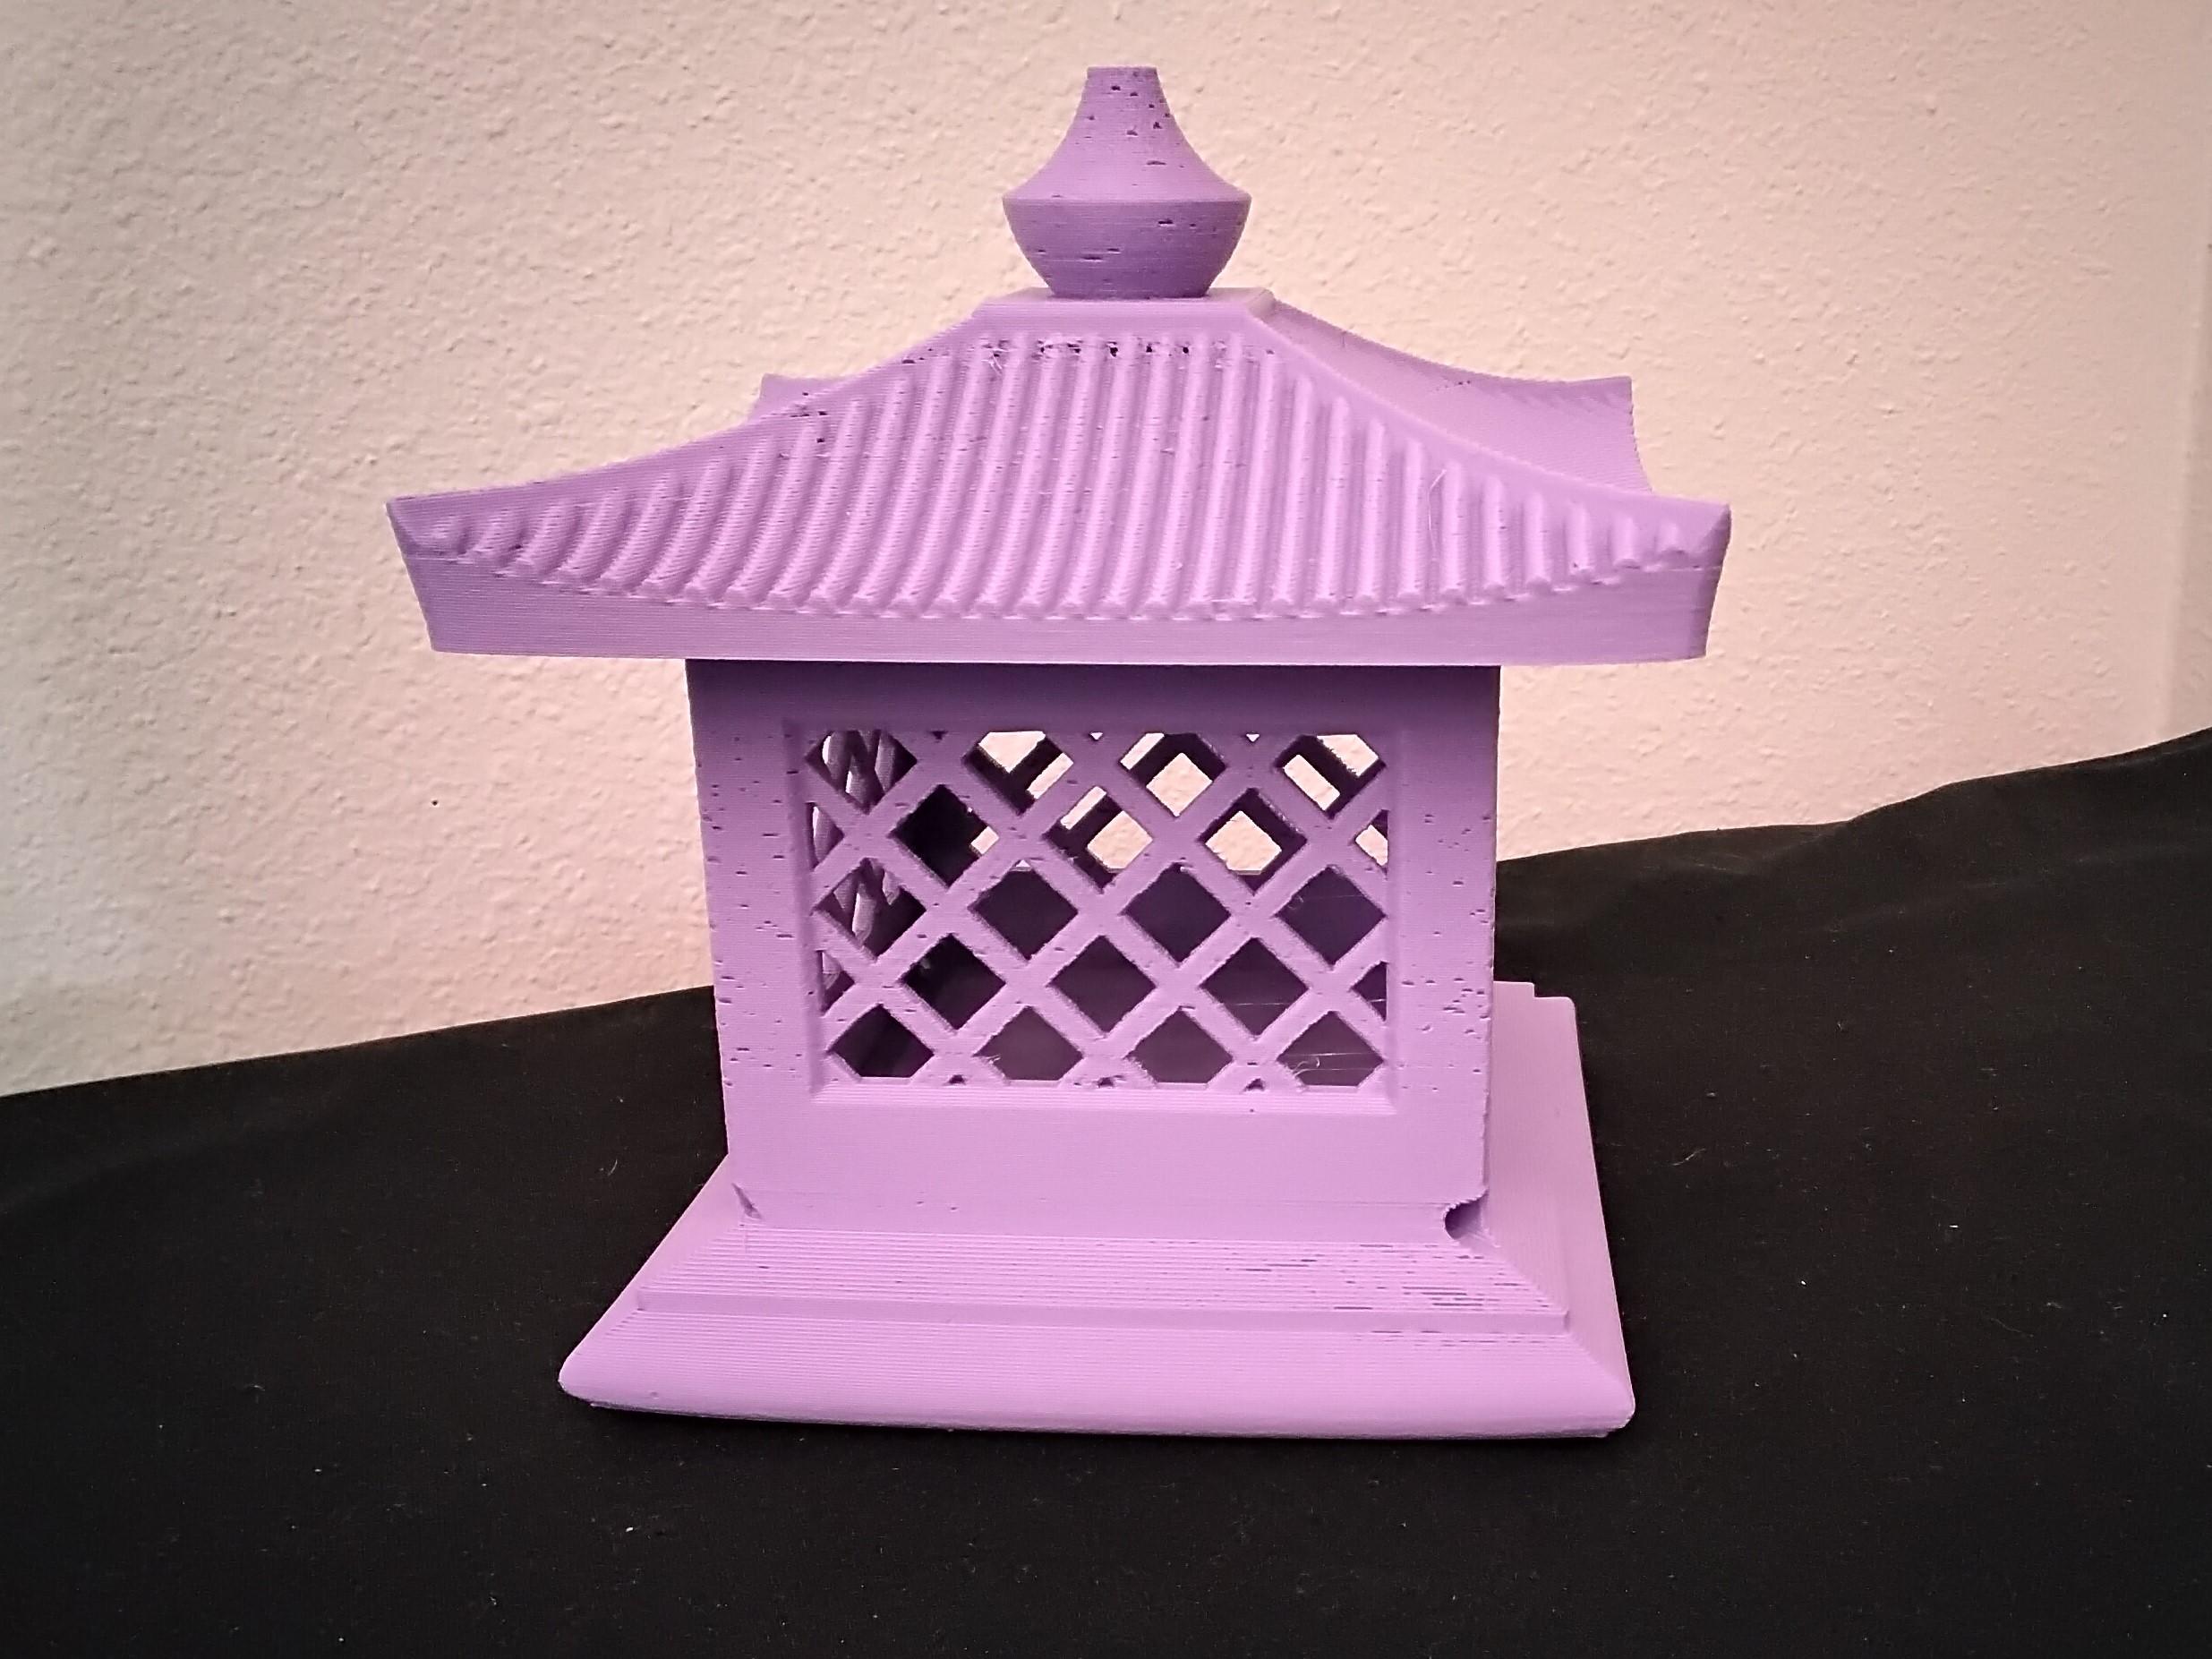 Japanese garden lamp post cap remix 3d model